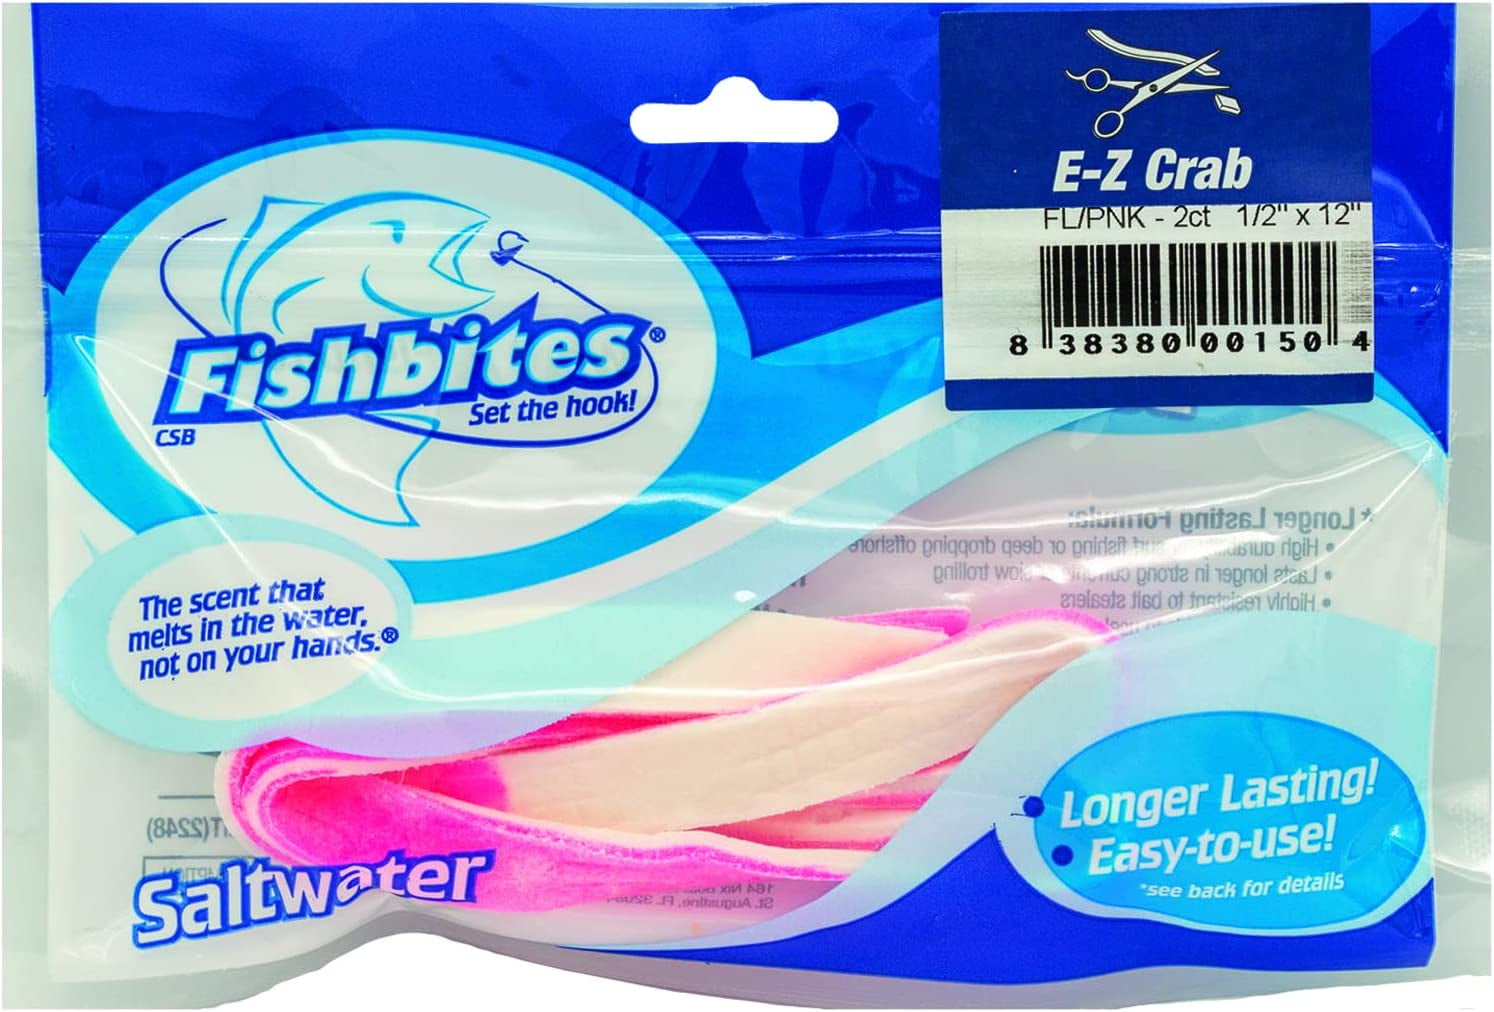 Fishbites 0150 E-Z Crab Long Lasting Bait Strips Flesh And Pink